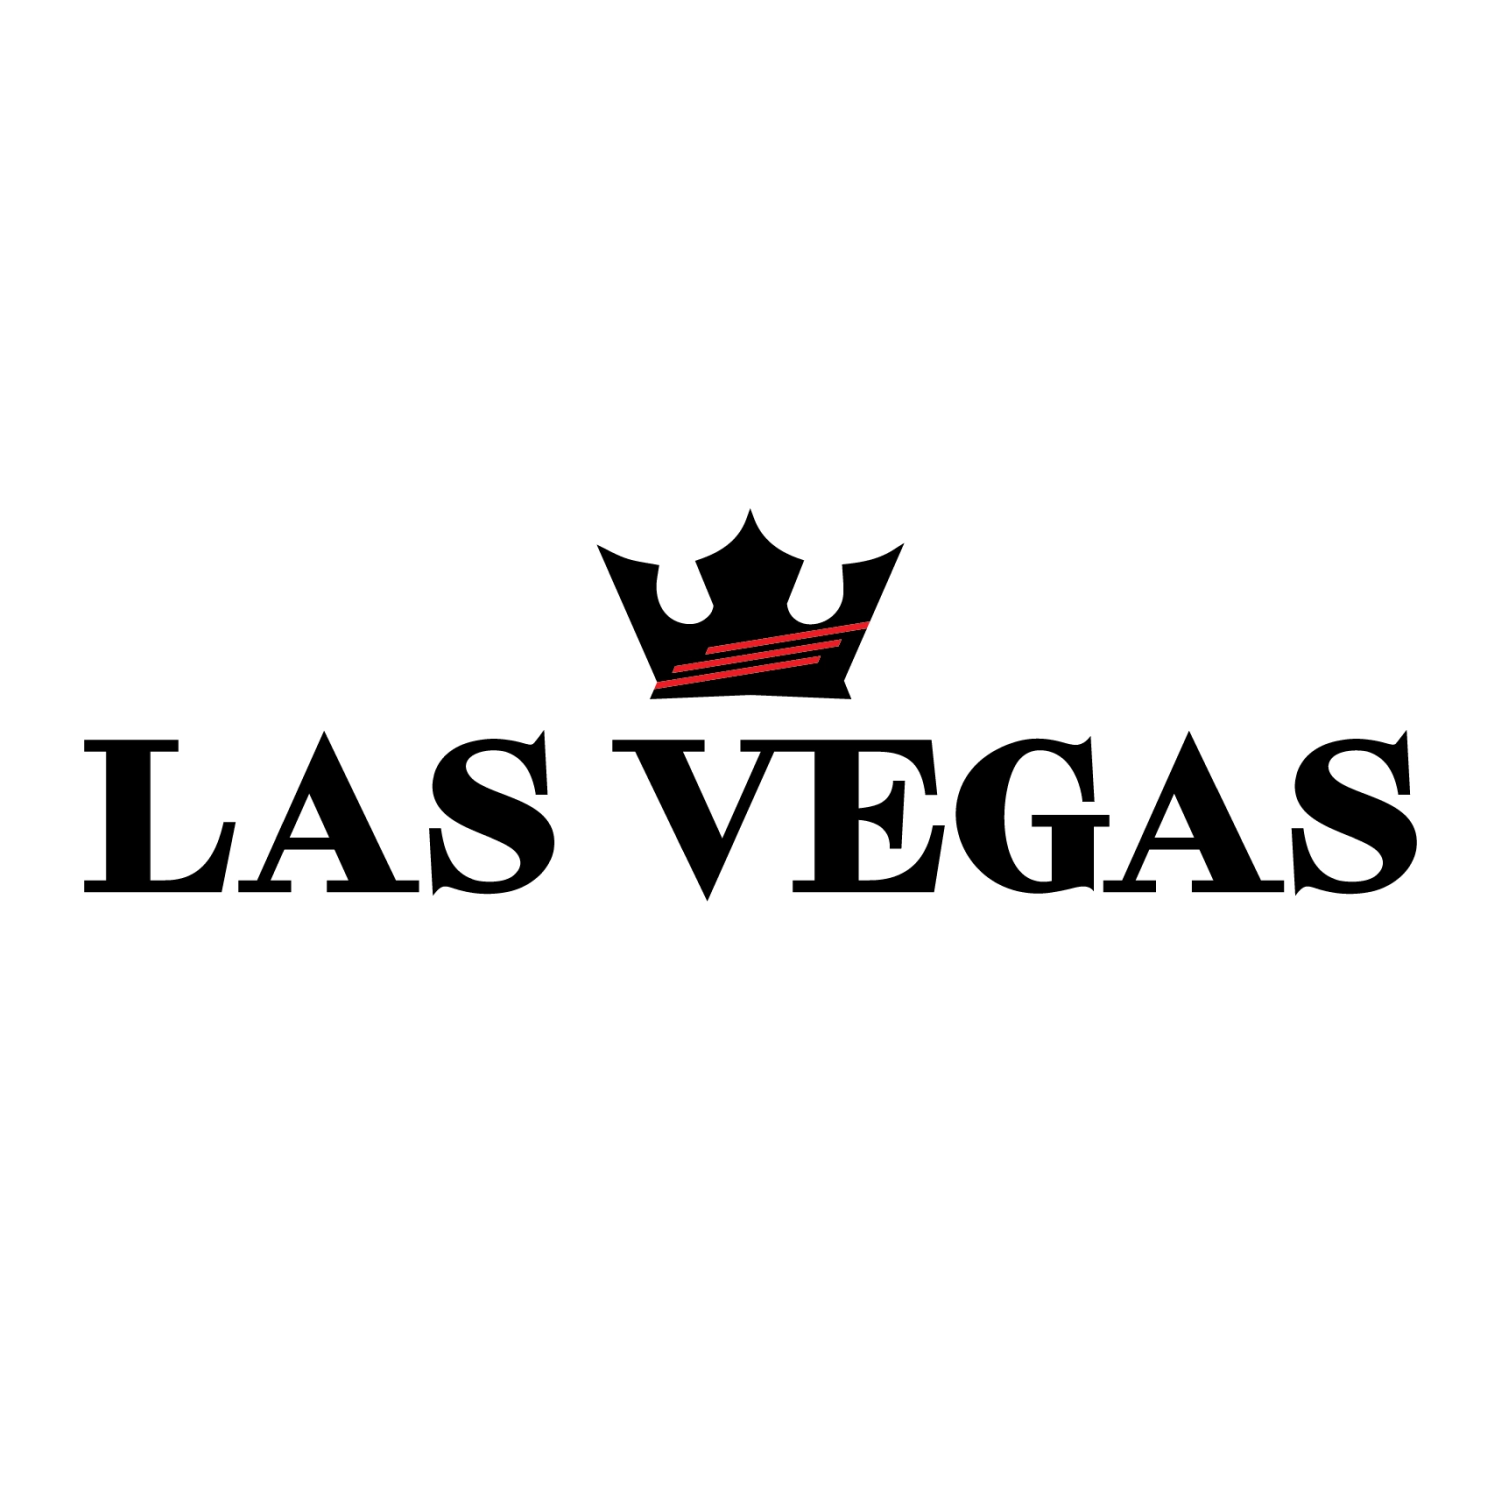 Las vegas casino logo rotund 1500x1500 alb